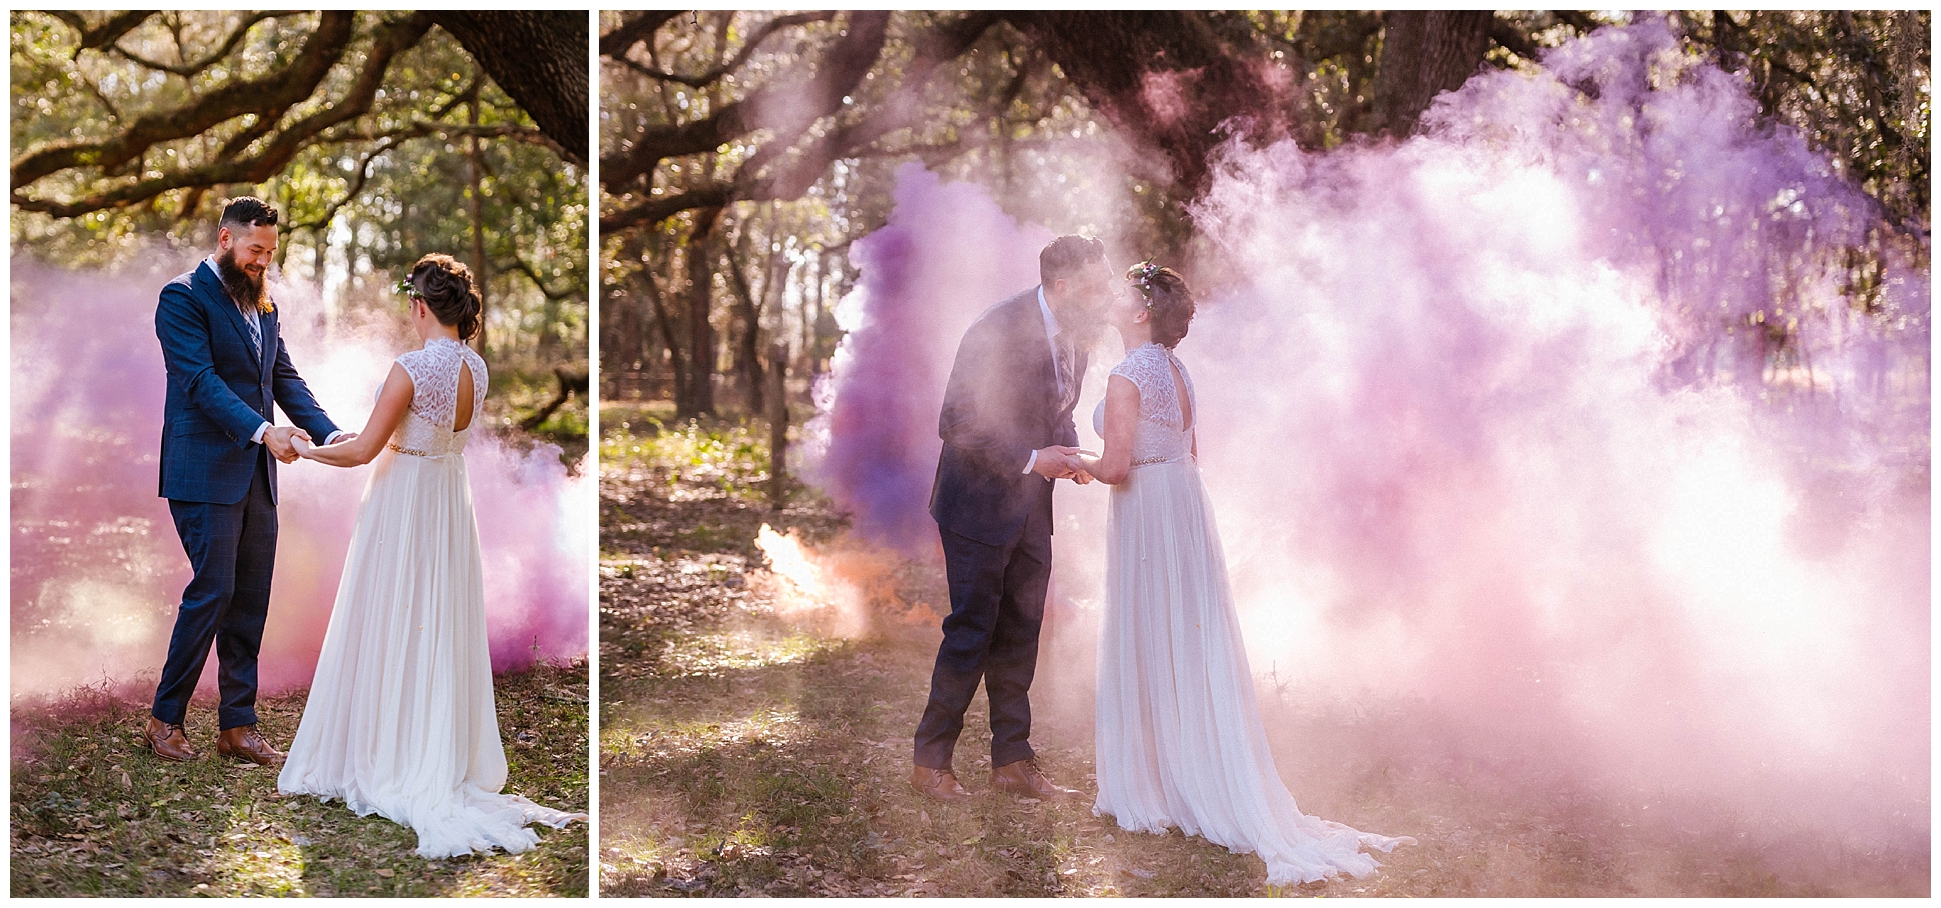 magical-outdoor-florida-wedding-smoke-bombs-flowers-crown-beard_0014.jpg